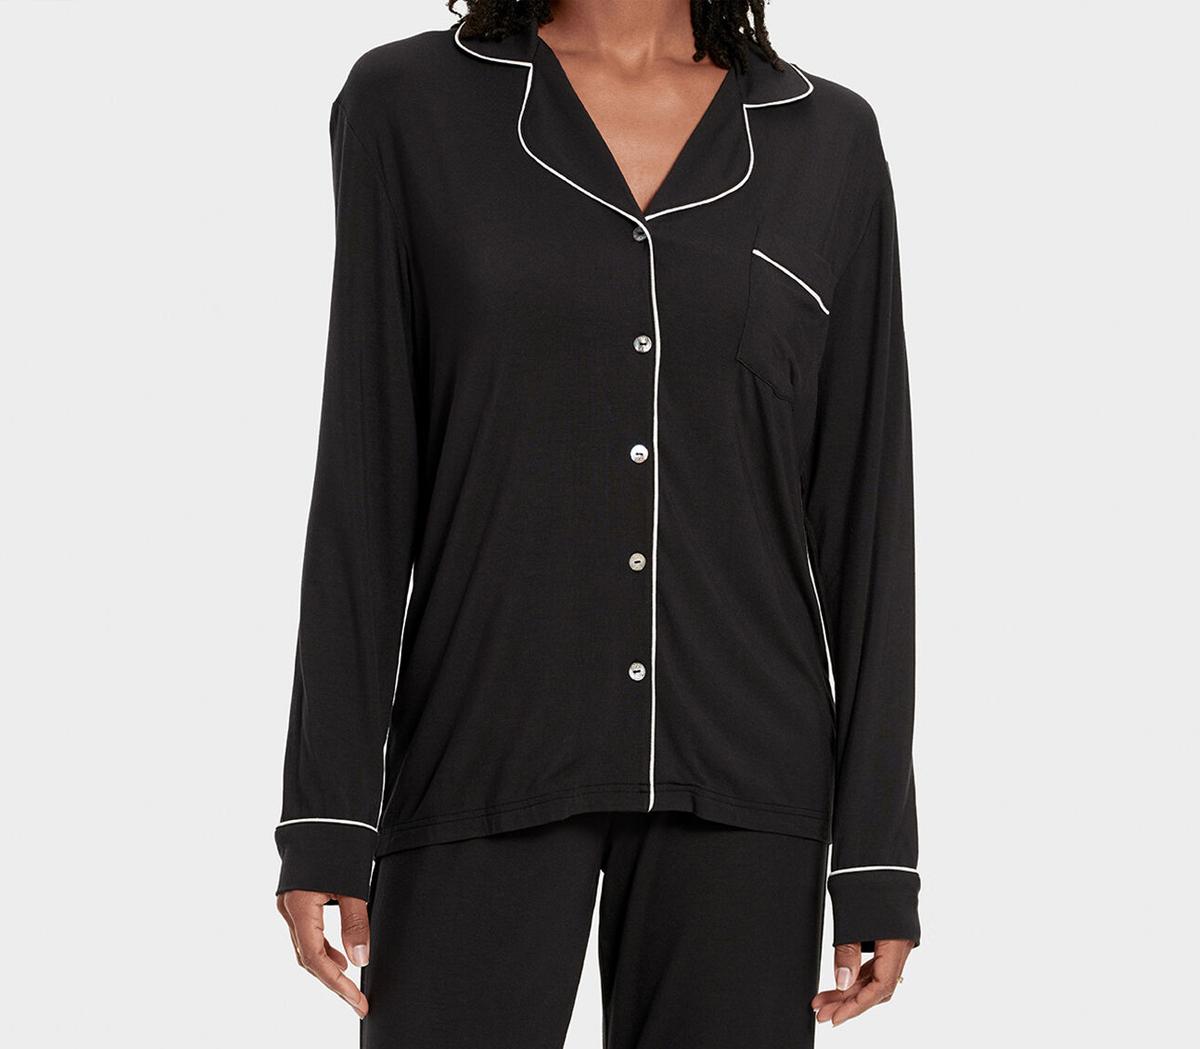 UGG Lennon Pyjama Set Black - Women's Loungewear